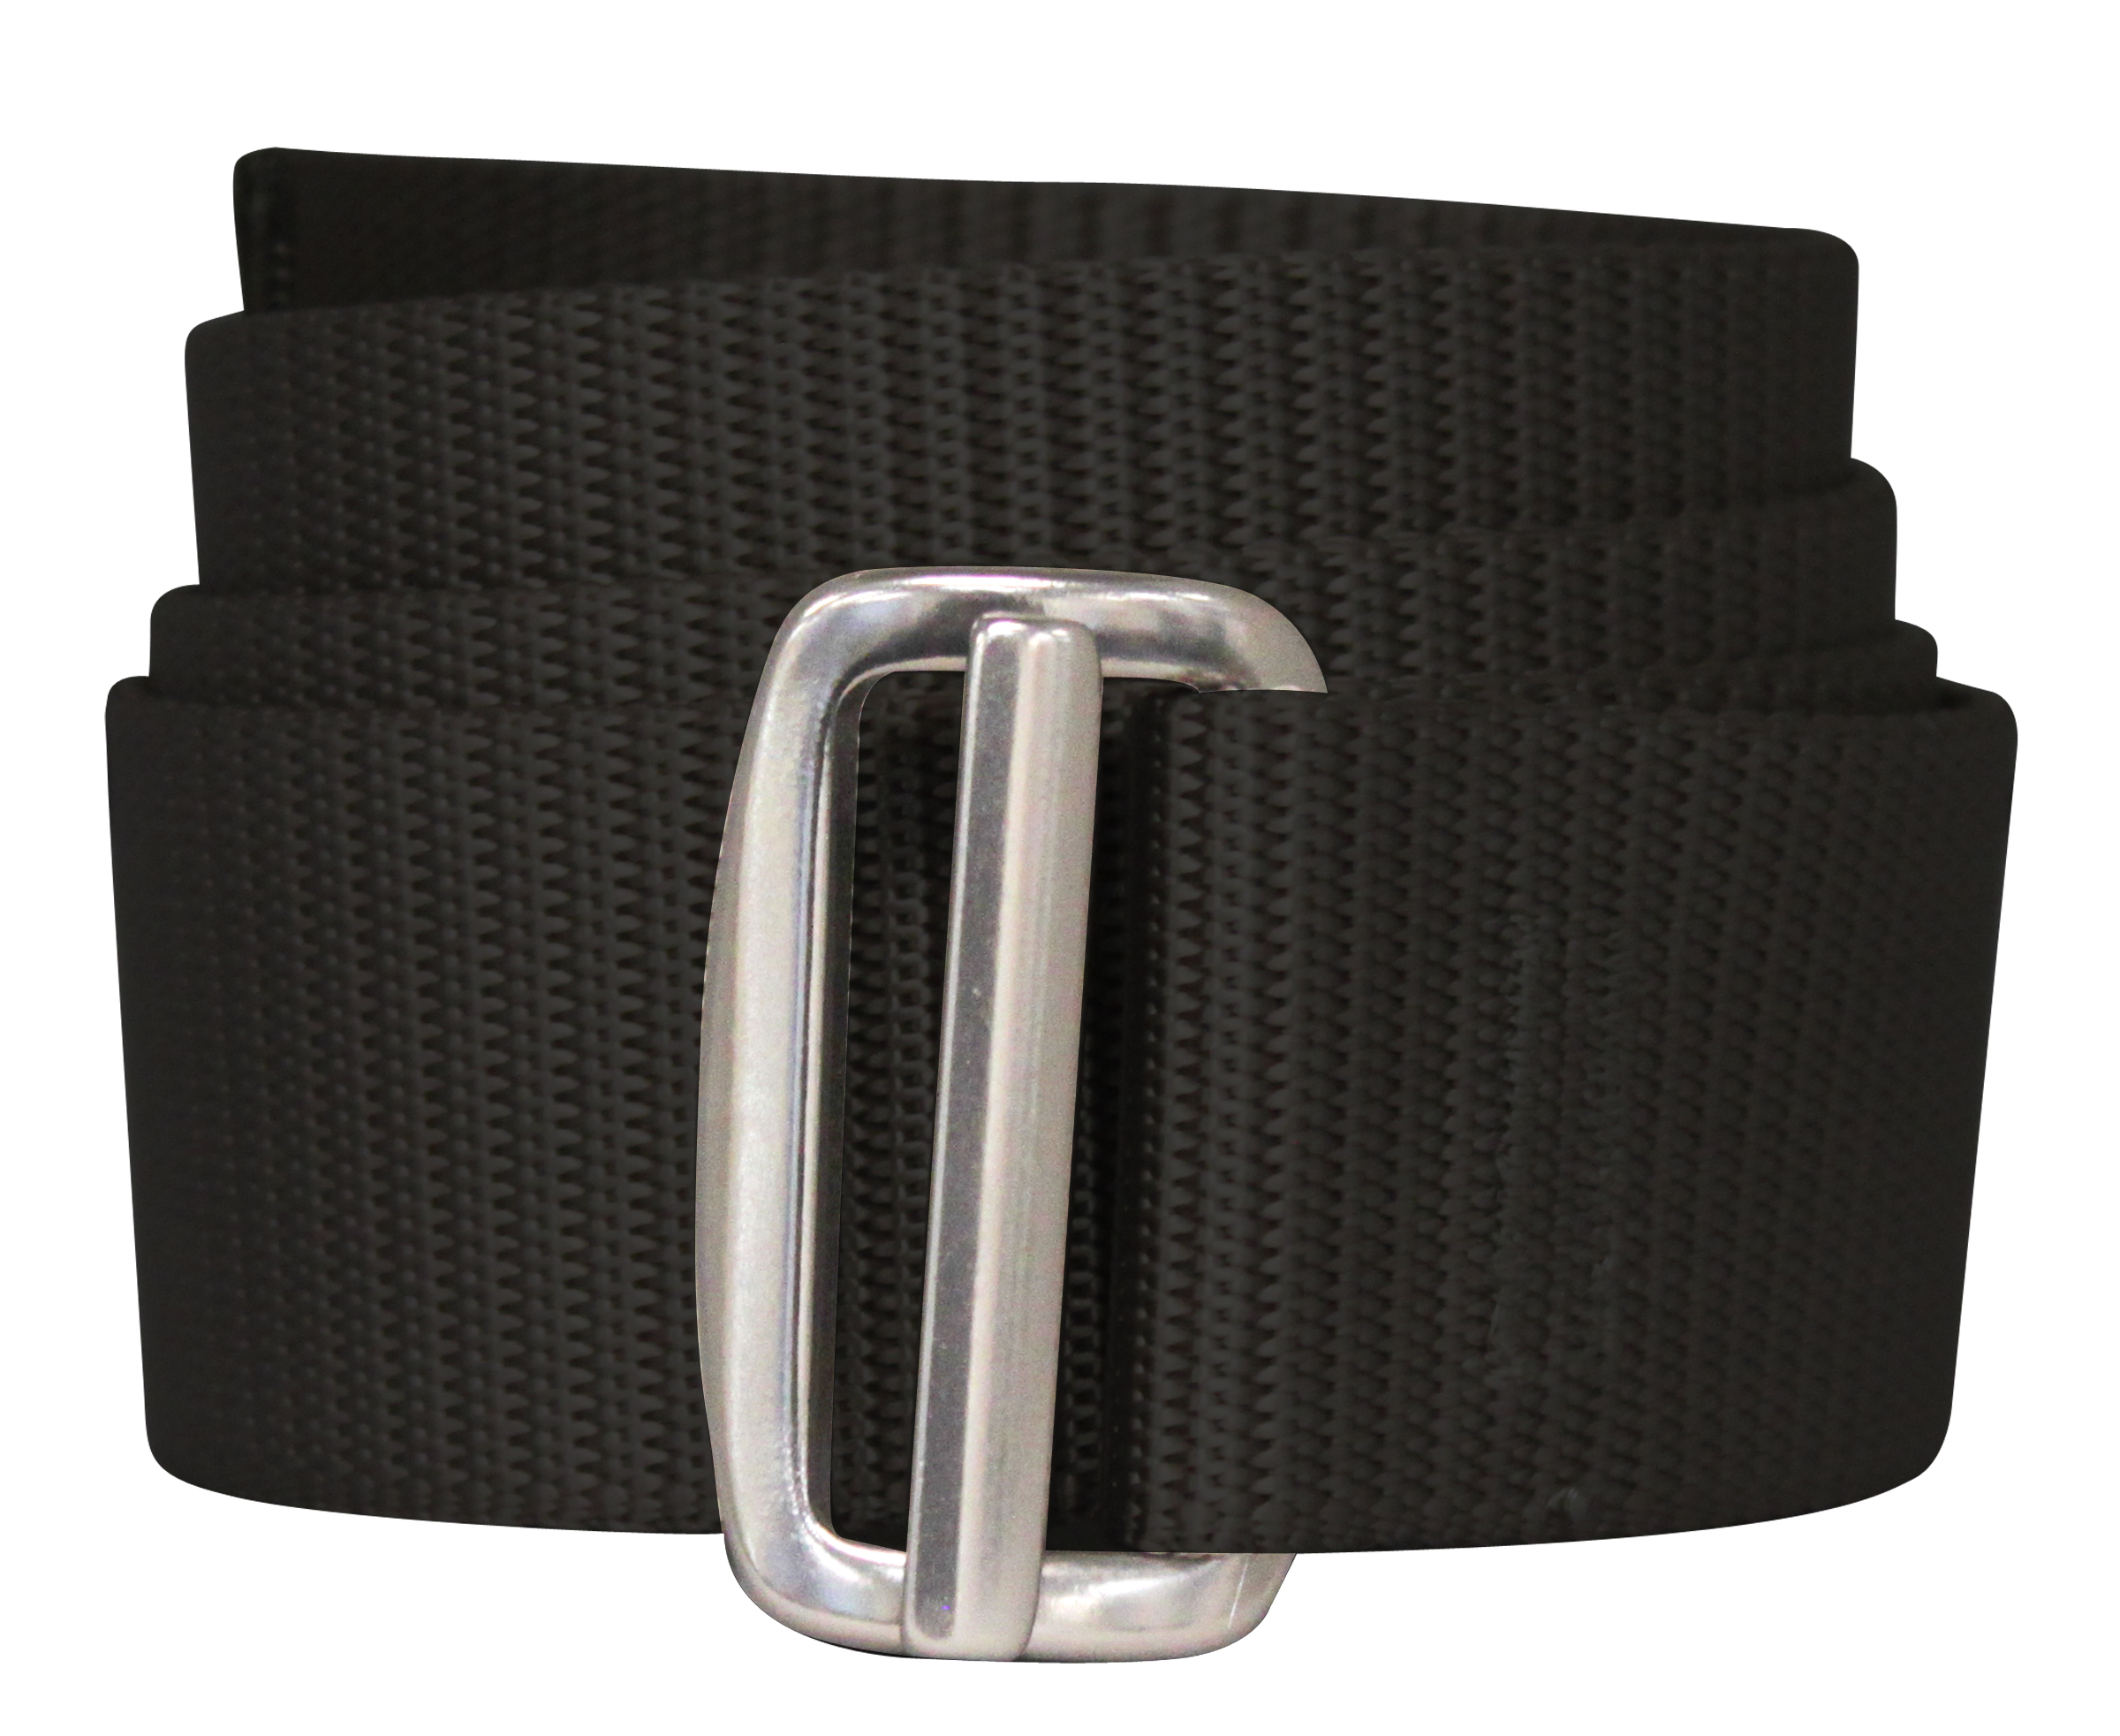  STOBOK 10Pcs Detachable Tension Belt Waist Buckle